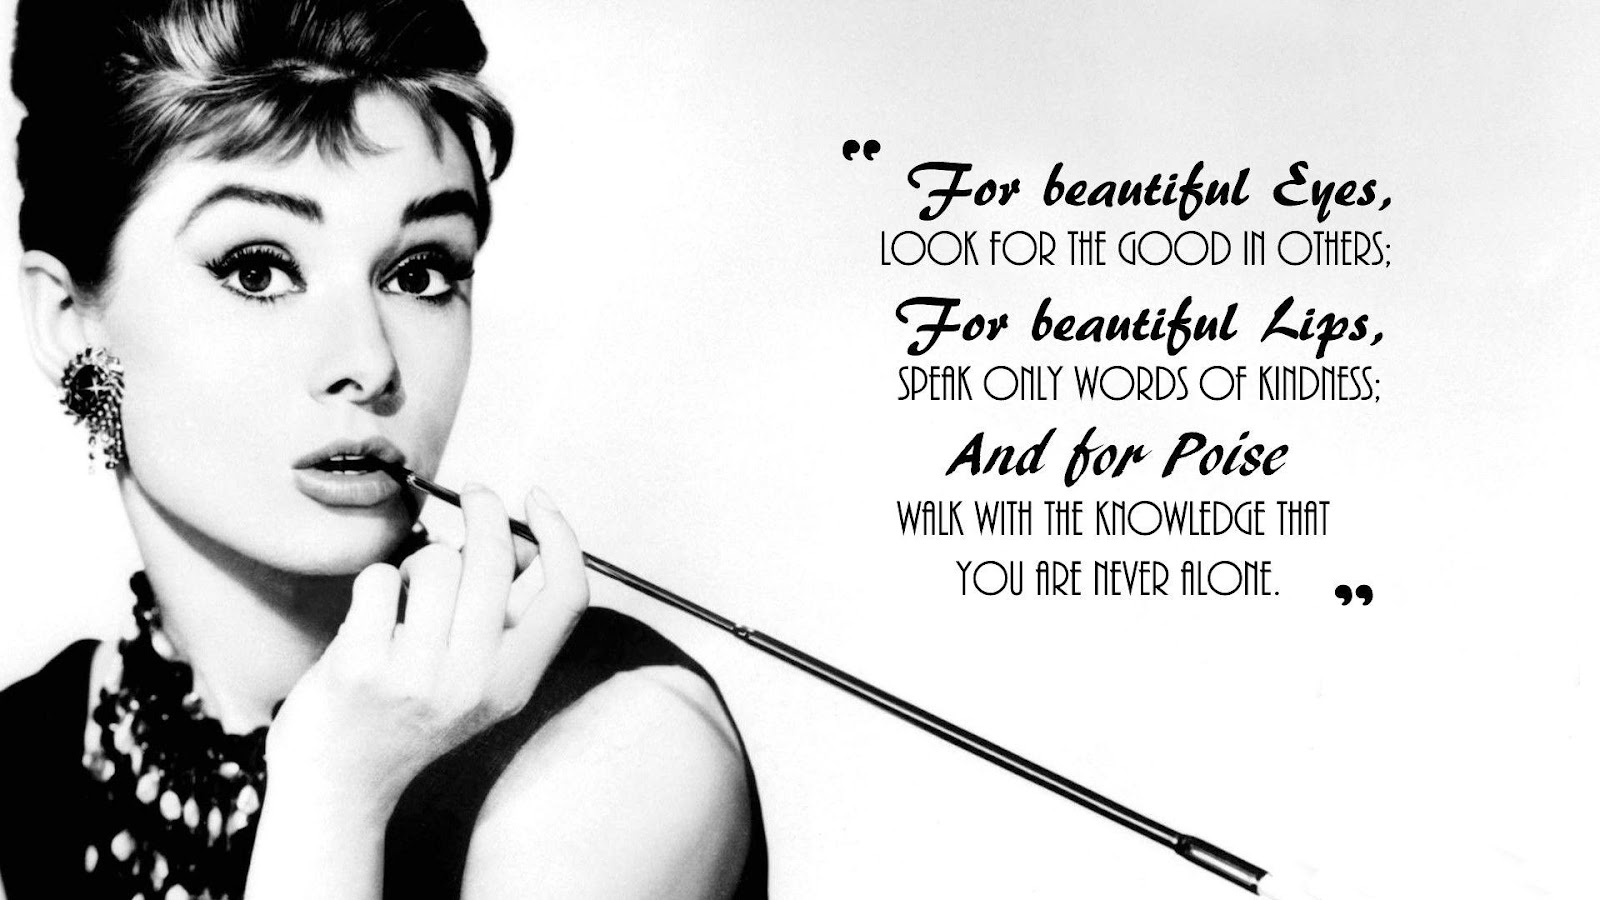 http://www.everythingaudrey.com/wp-content/gallery/audrey-hepburn-quotes/Audrey-Hepburn-Inspirational-Quotes-22.jpg